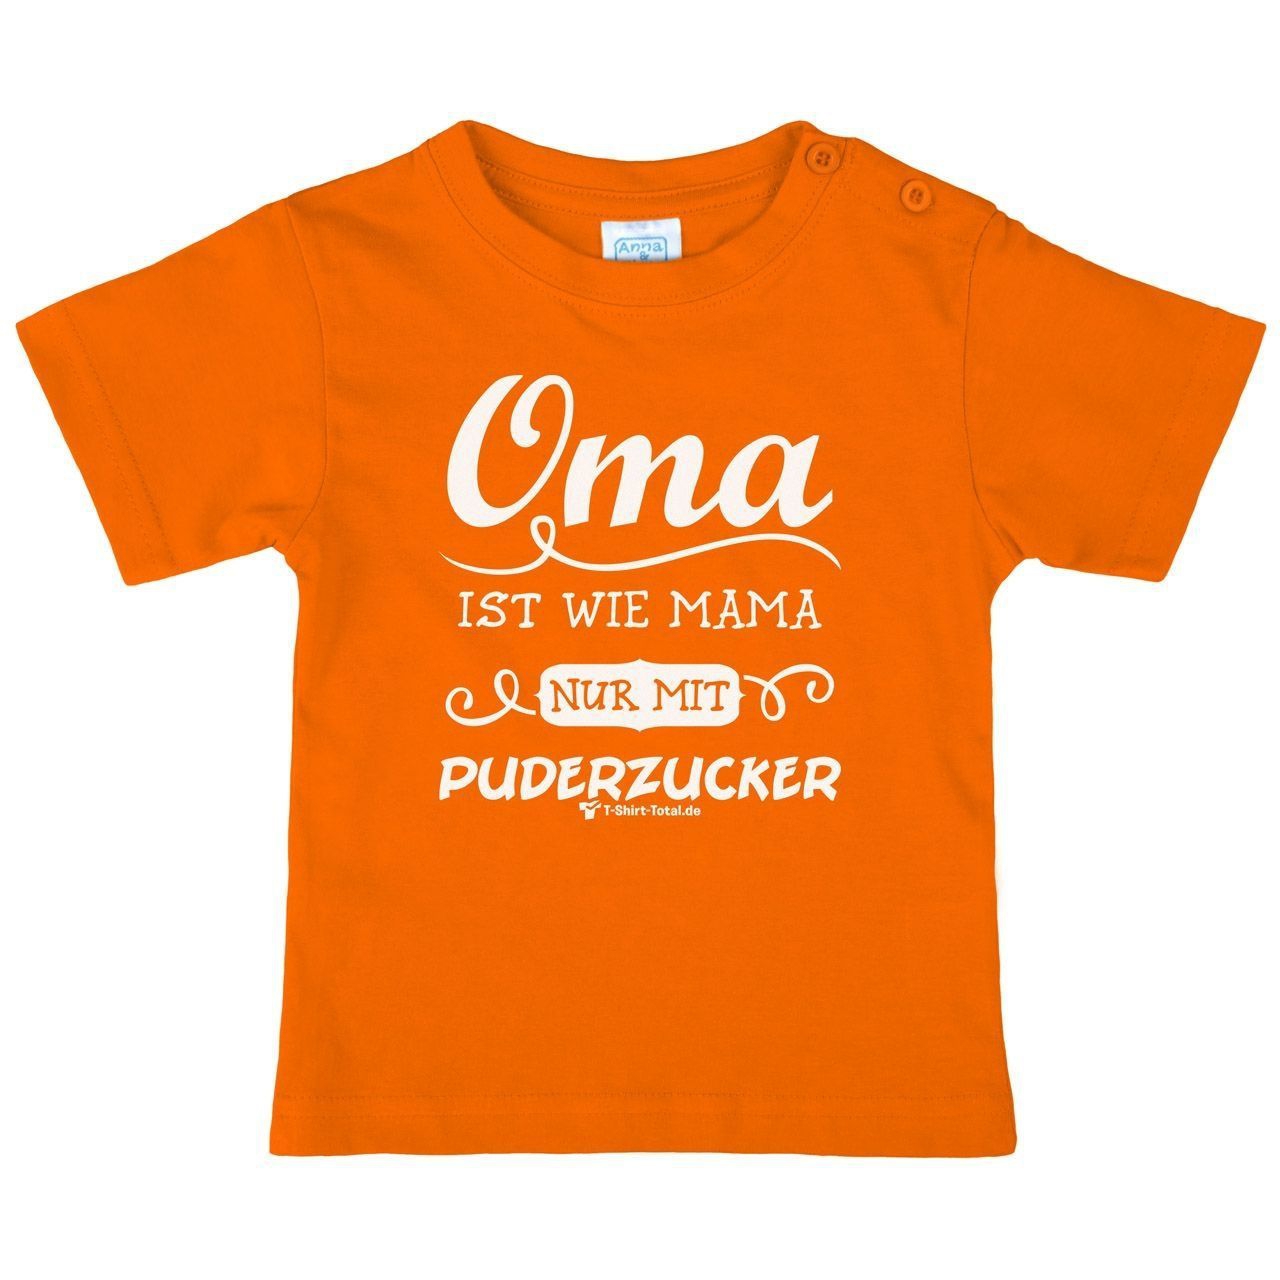 Oma Puderzucker Kinder T-Shirt orange 80 / 86